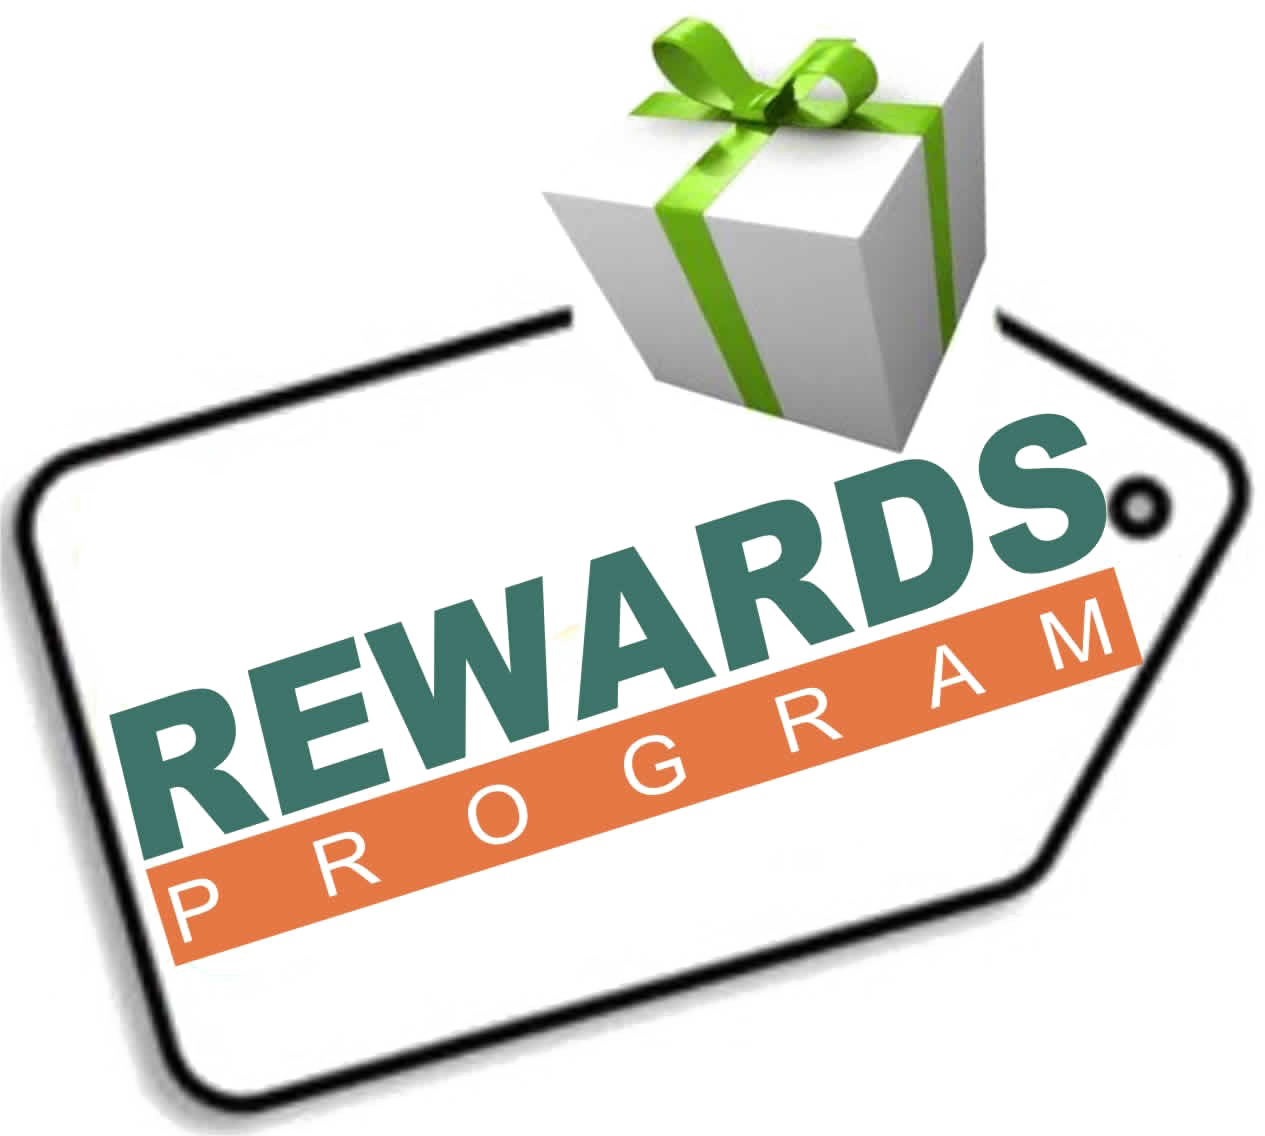 Rewards Free Transparent Image HQ PNG Image